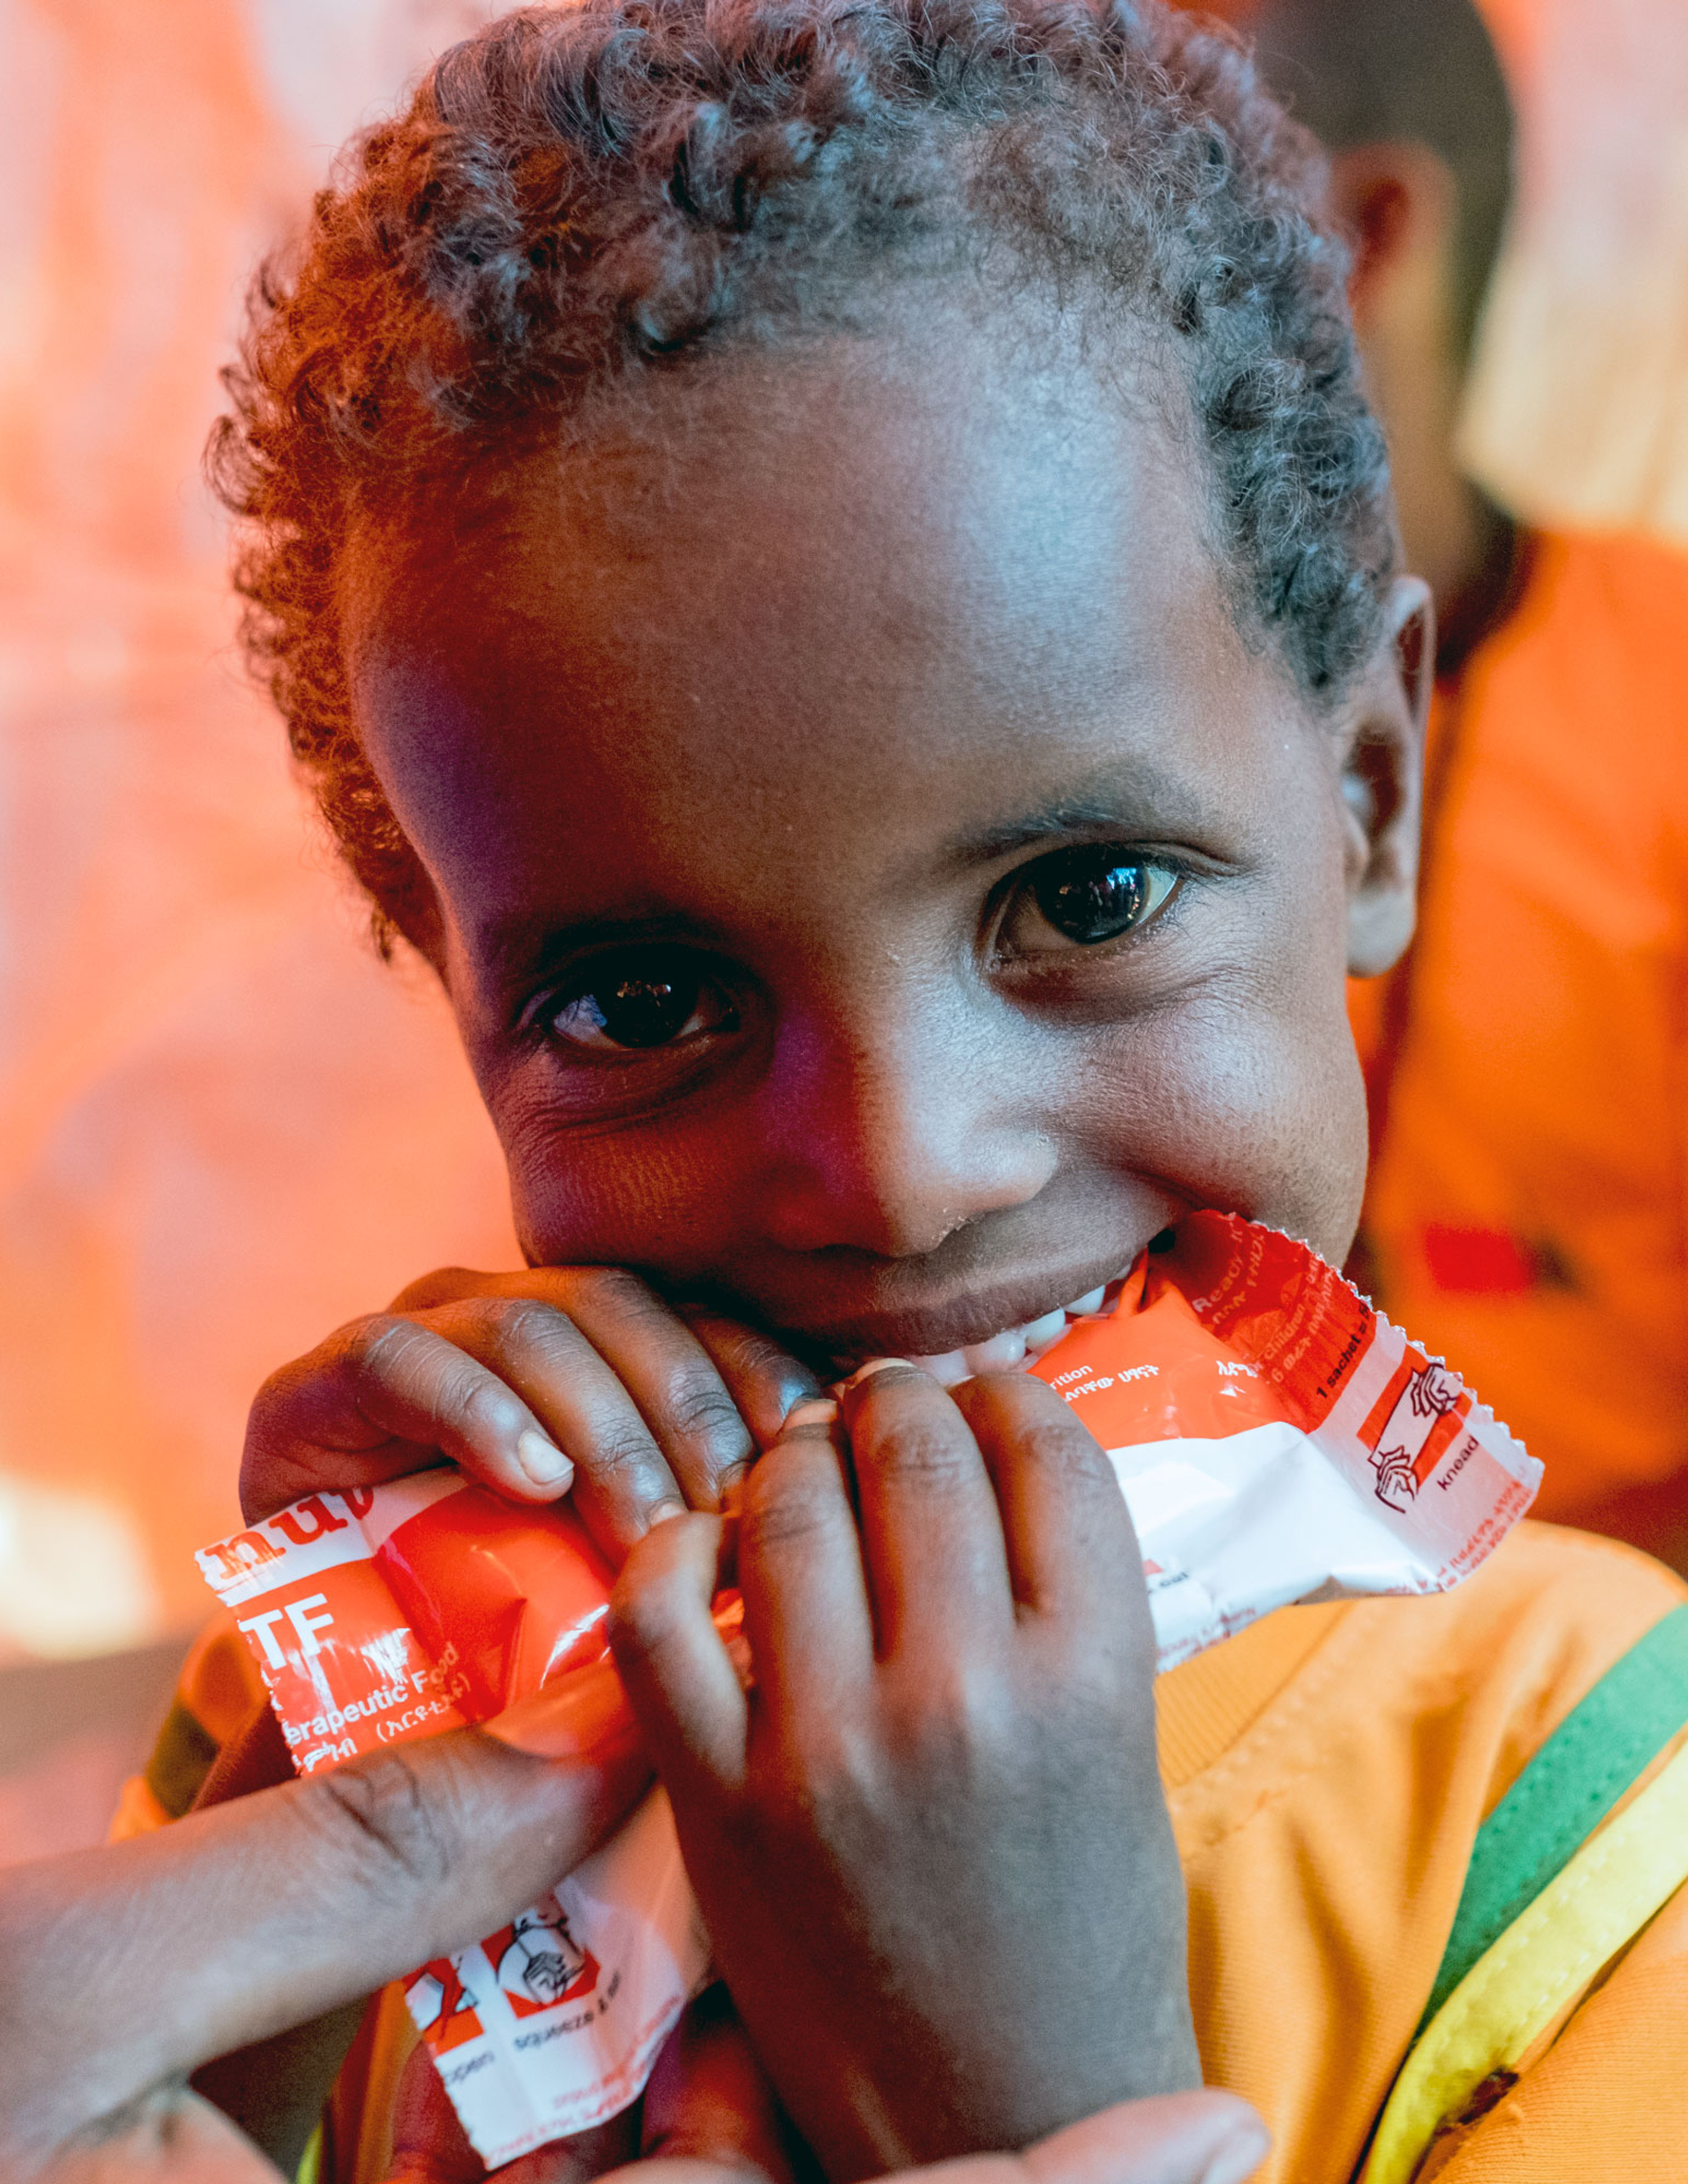 A young Somali boy eats a nutripacket full of emergency nutrition.